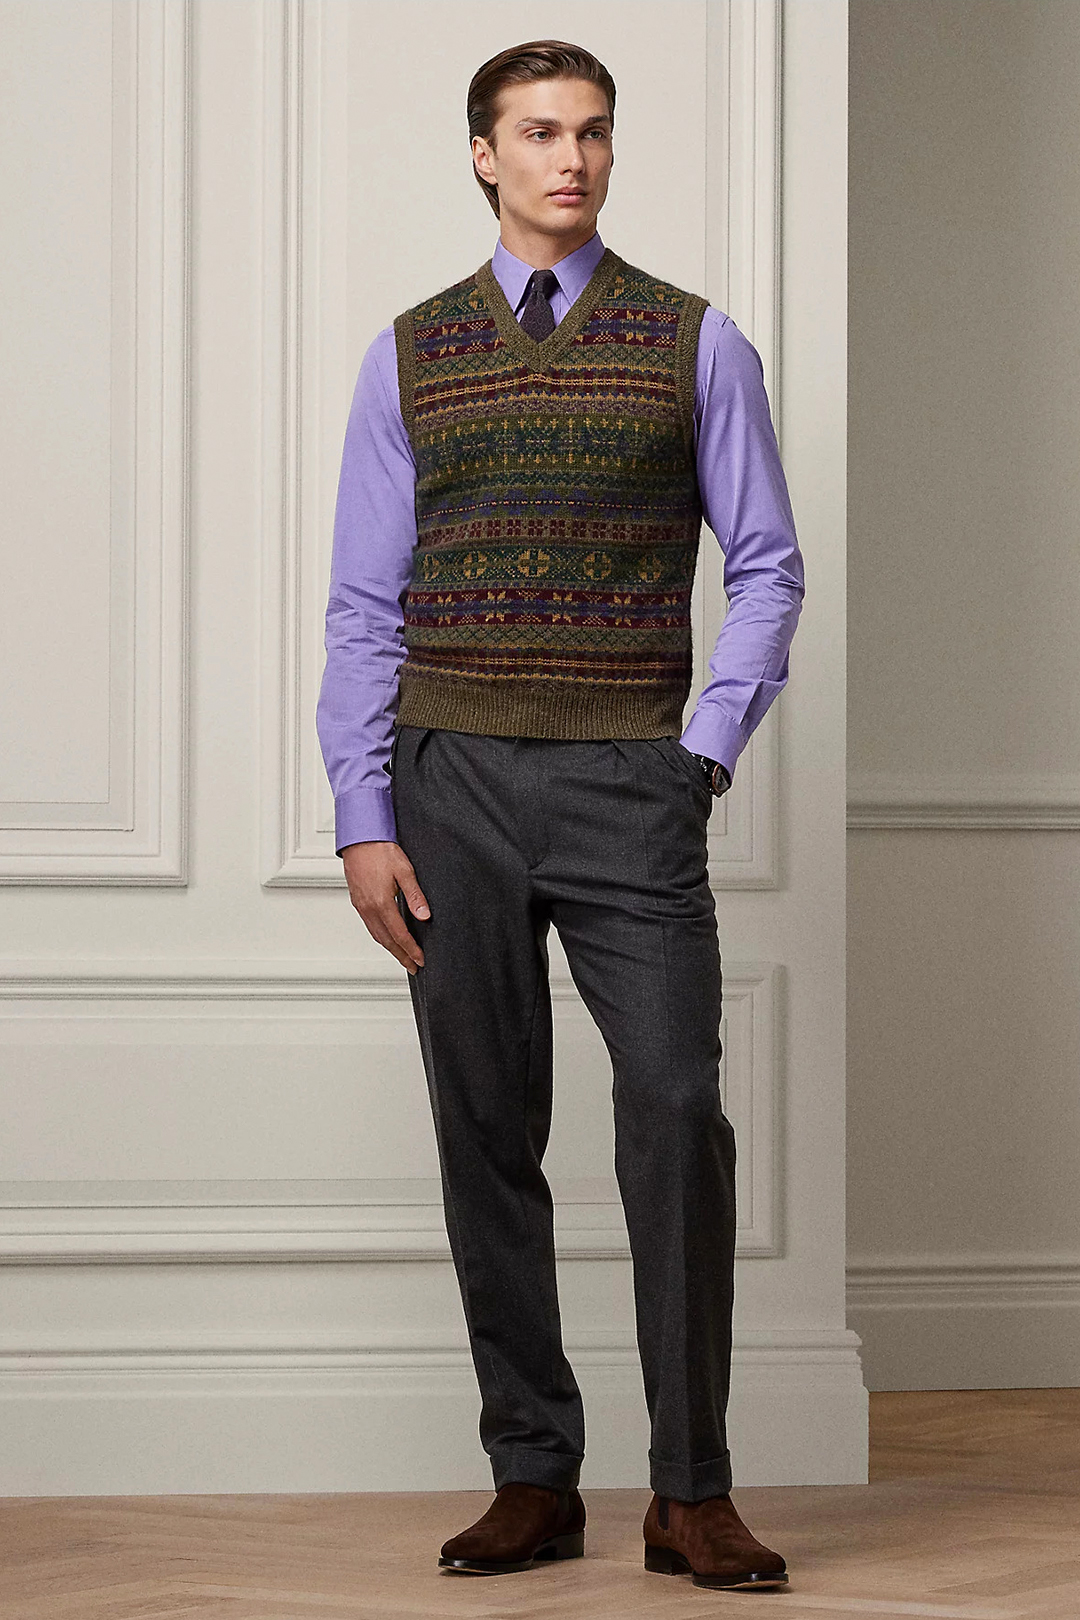 Multi-color sweater vest, violet dress shirt, violet tie, charcoal dress pants, and brown suede Chelsea boots outfit